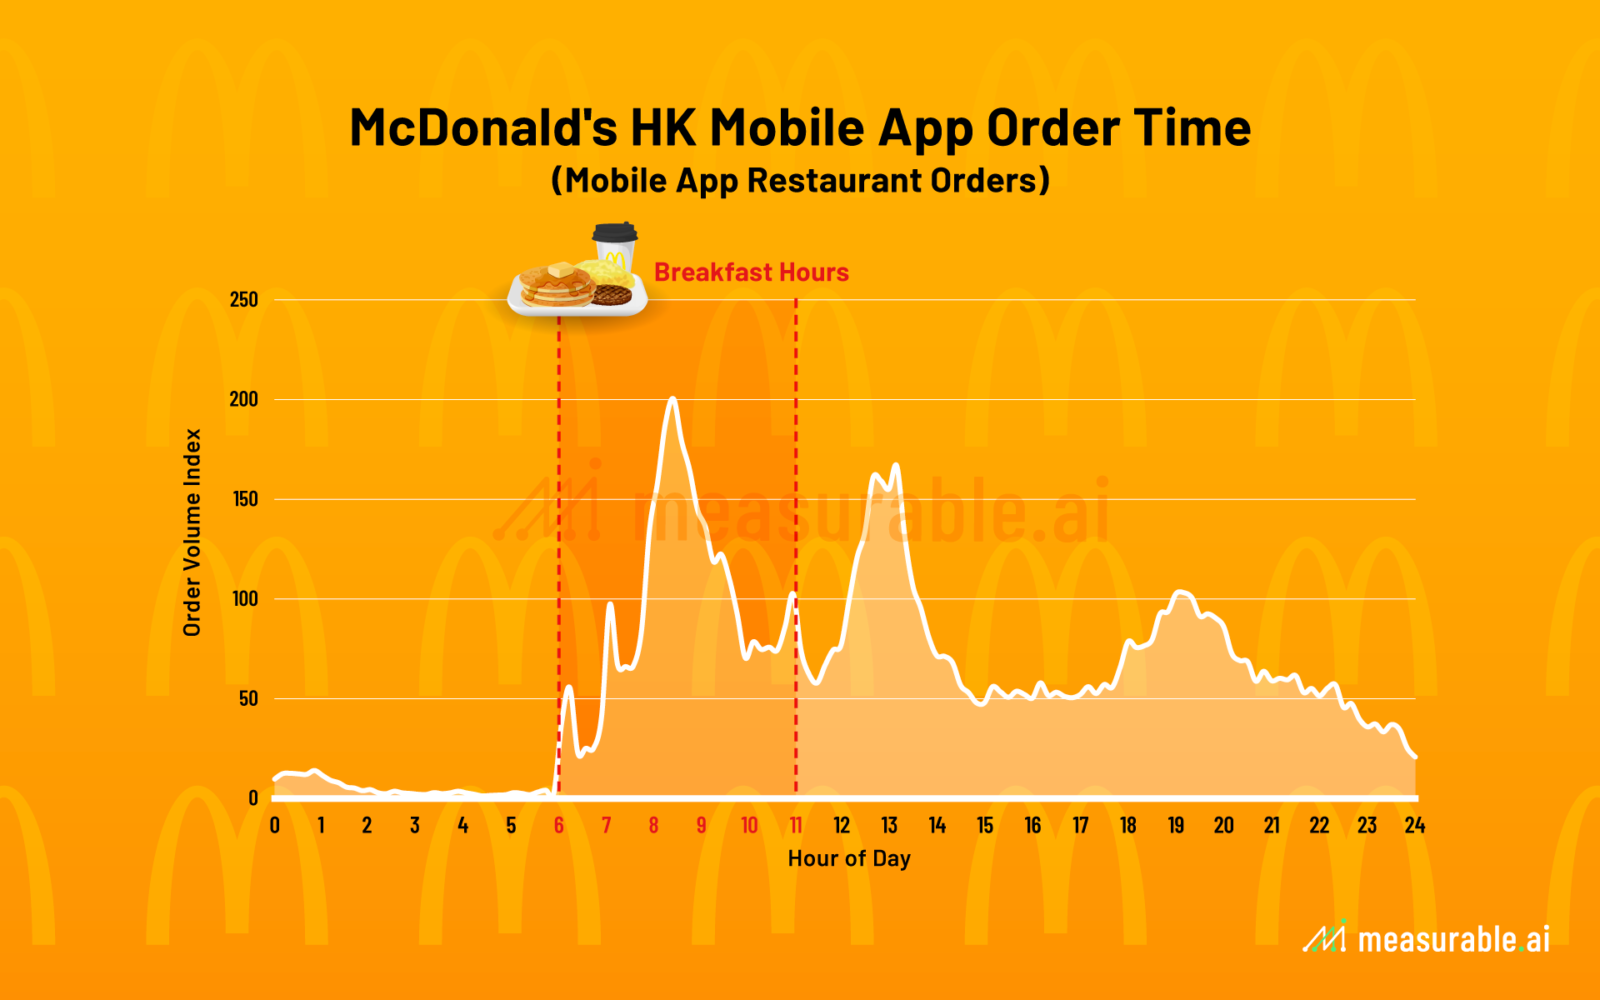 McDonald's HK Mobile App Order Time